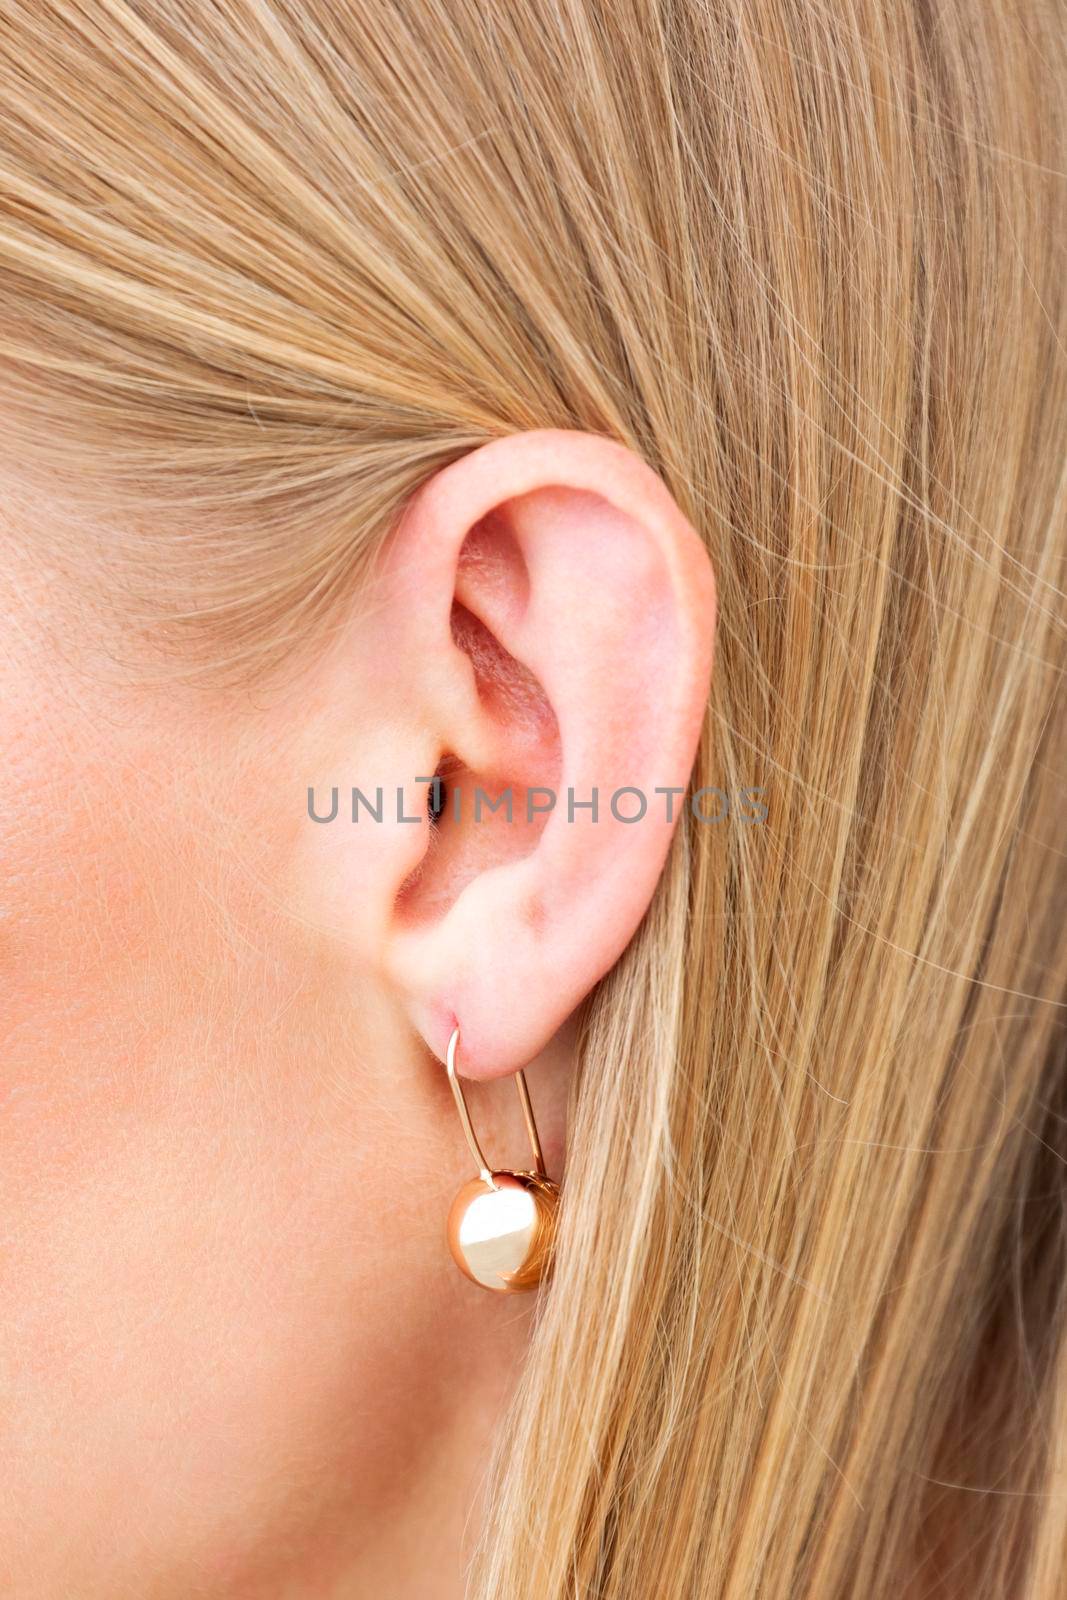 Closeup shot of female ear with earring